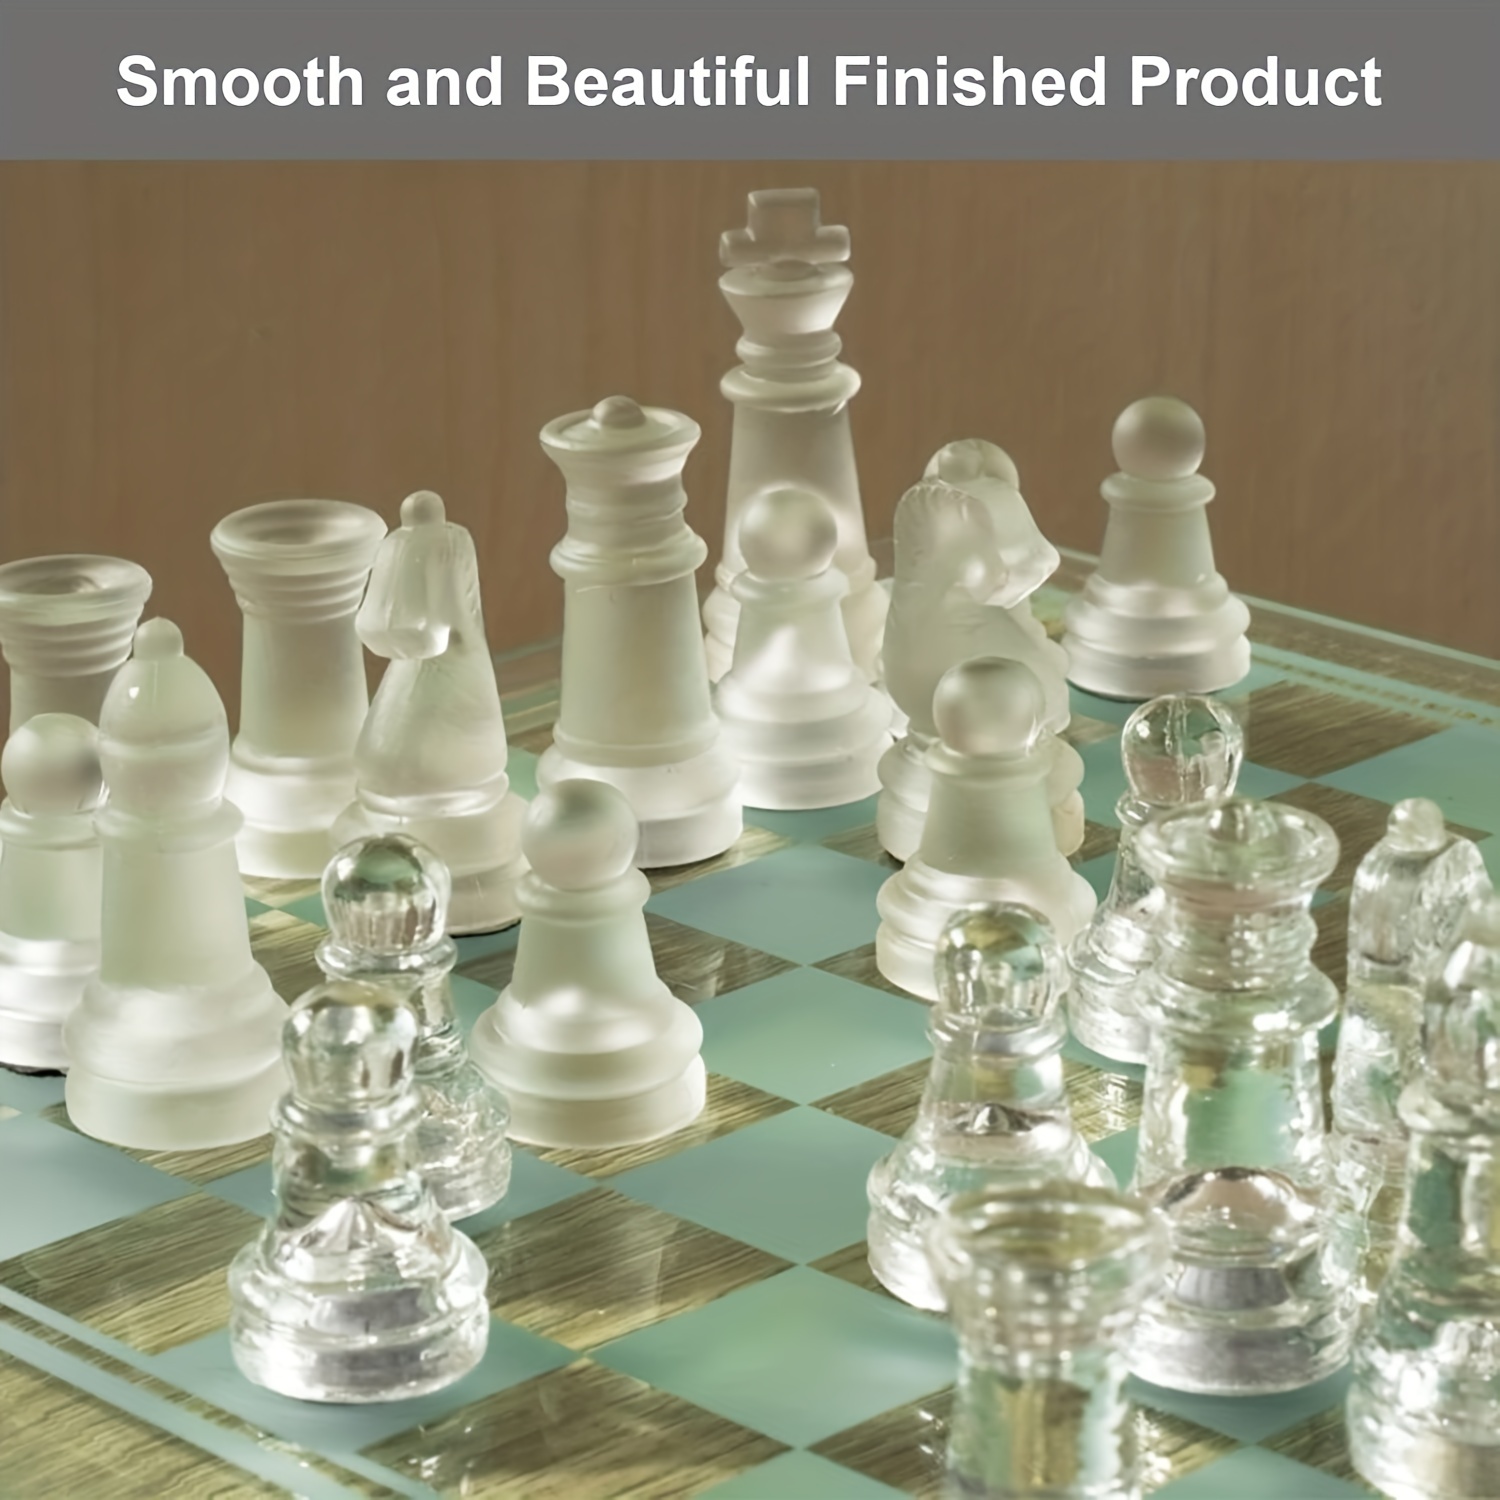 Full Sized Epoxy Resin Chess Board Mold - Make HUGE Custom Chess